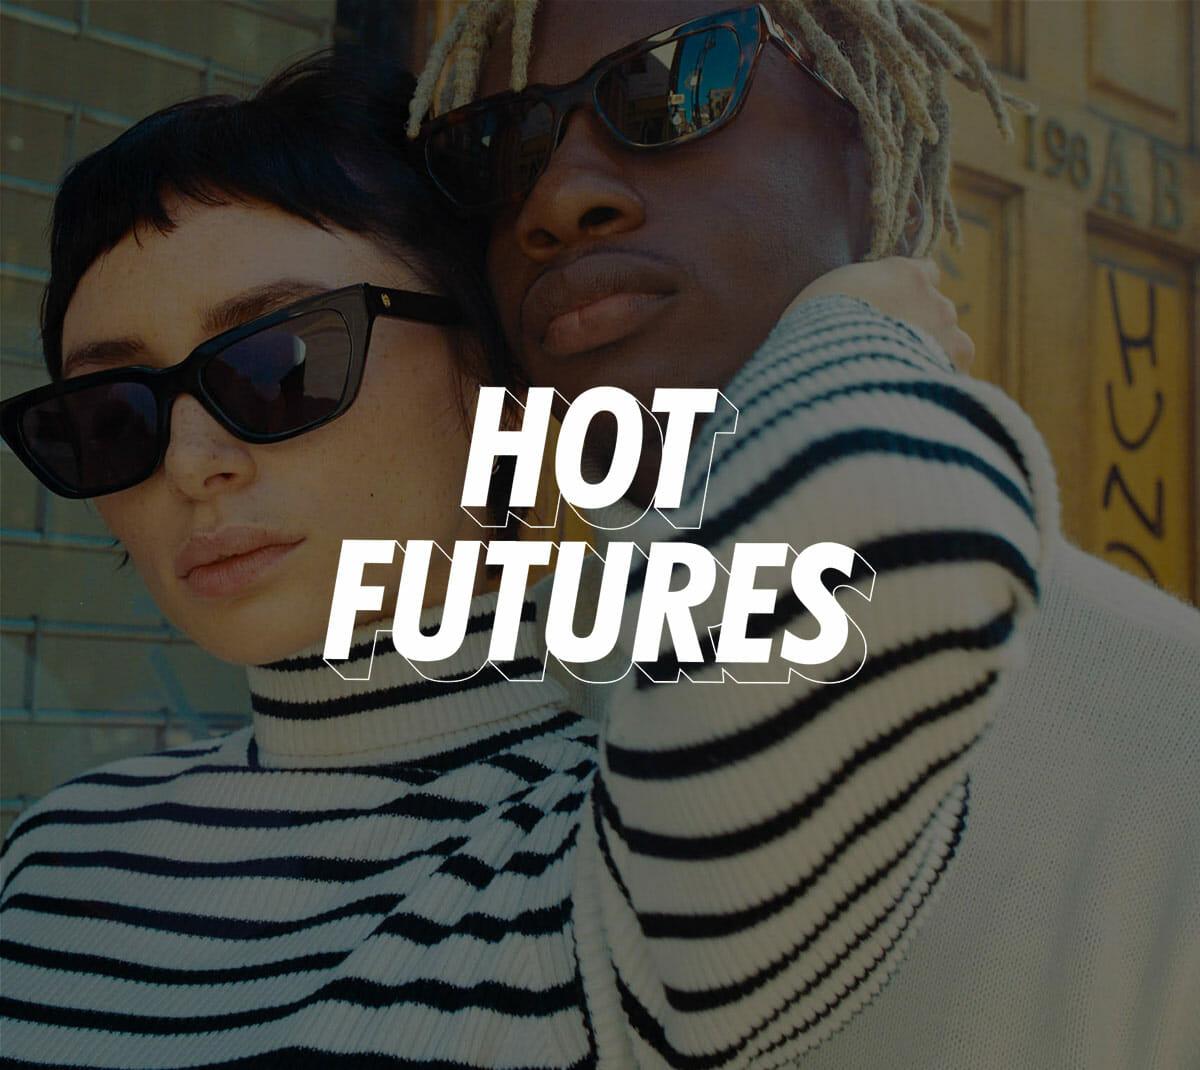 Hot futures logo